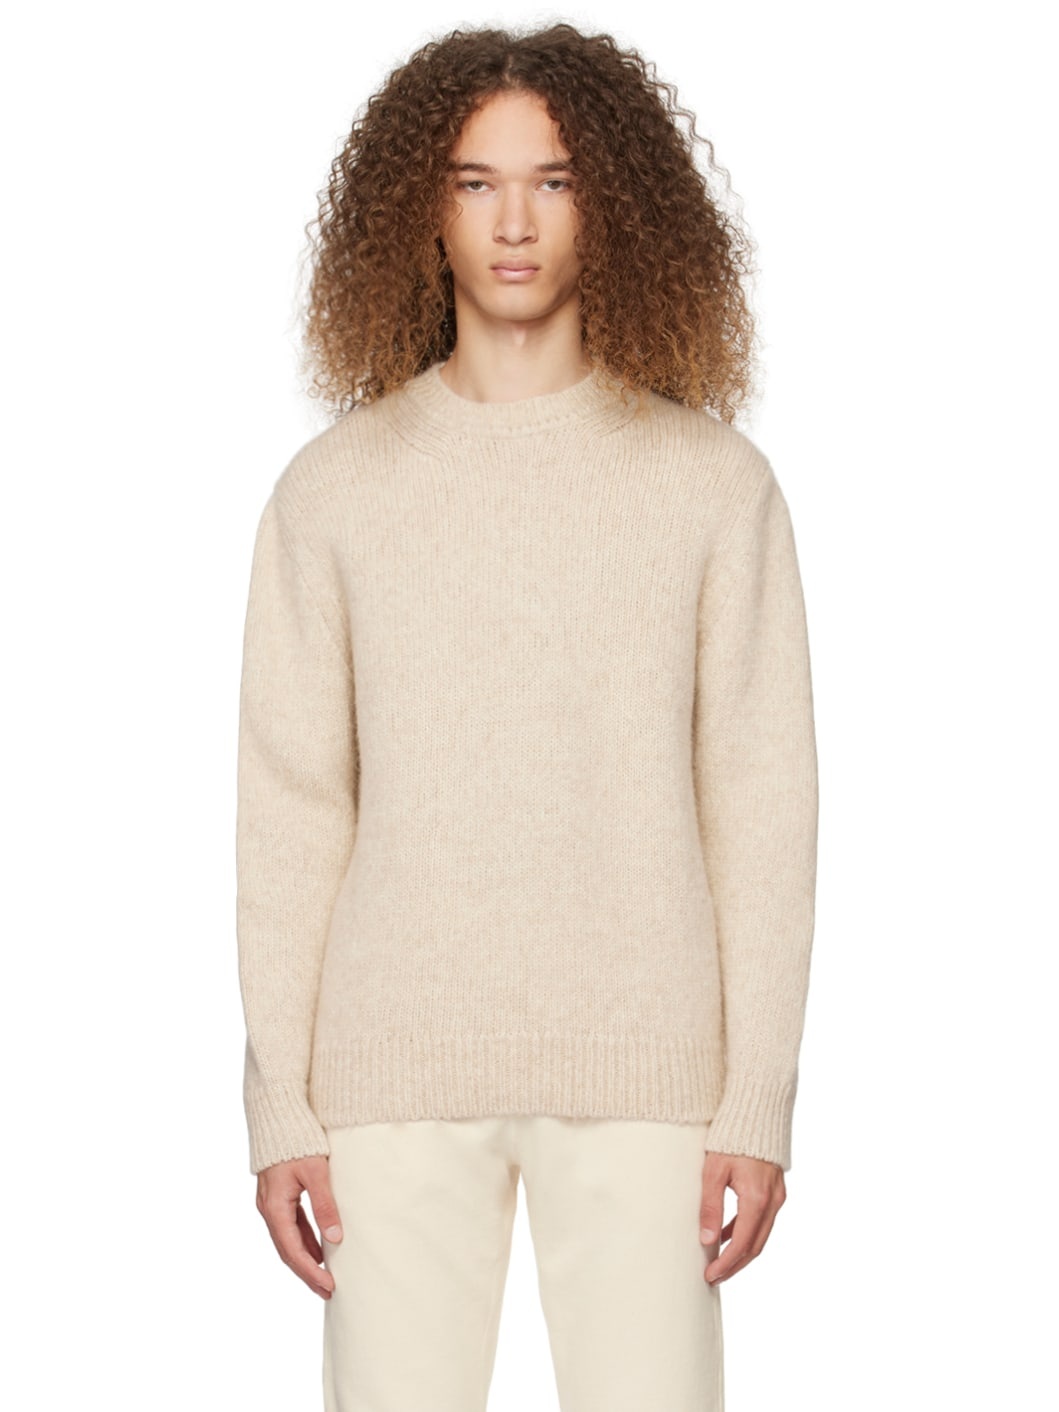 Beige Crewneck Sweater - 1